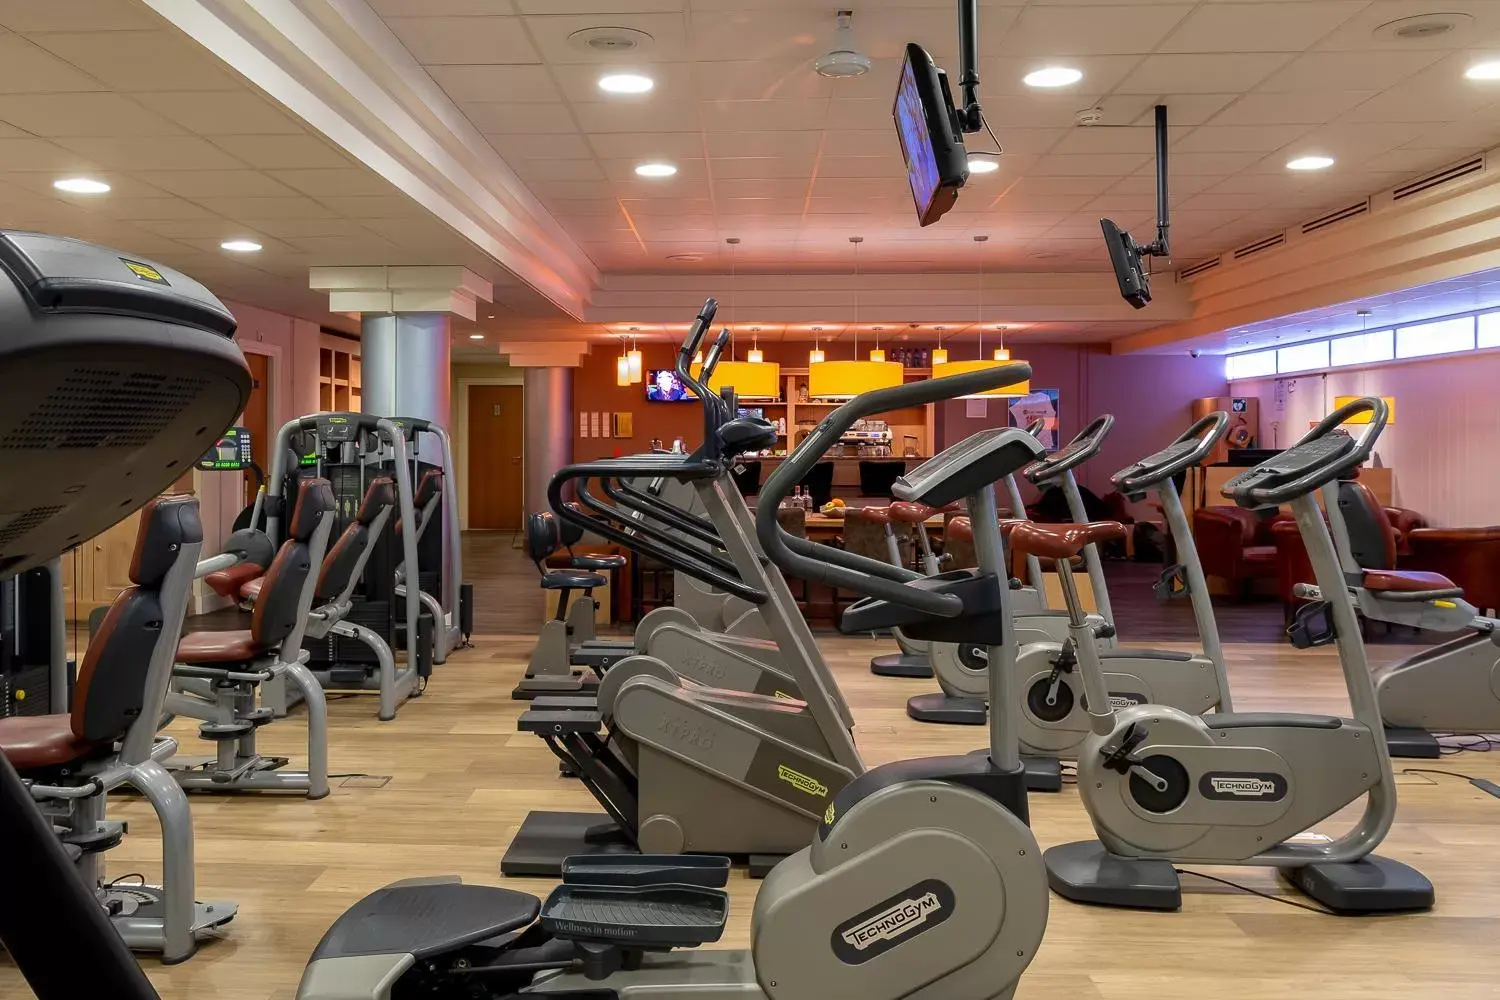 Fitness centre/facilities, Fitness Center/Facilities in Van der Valk Palace Hotel Noordwijk